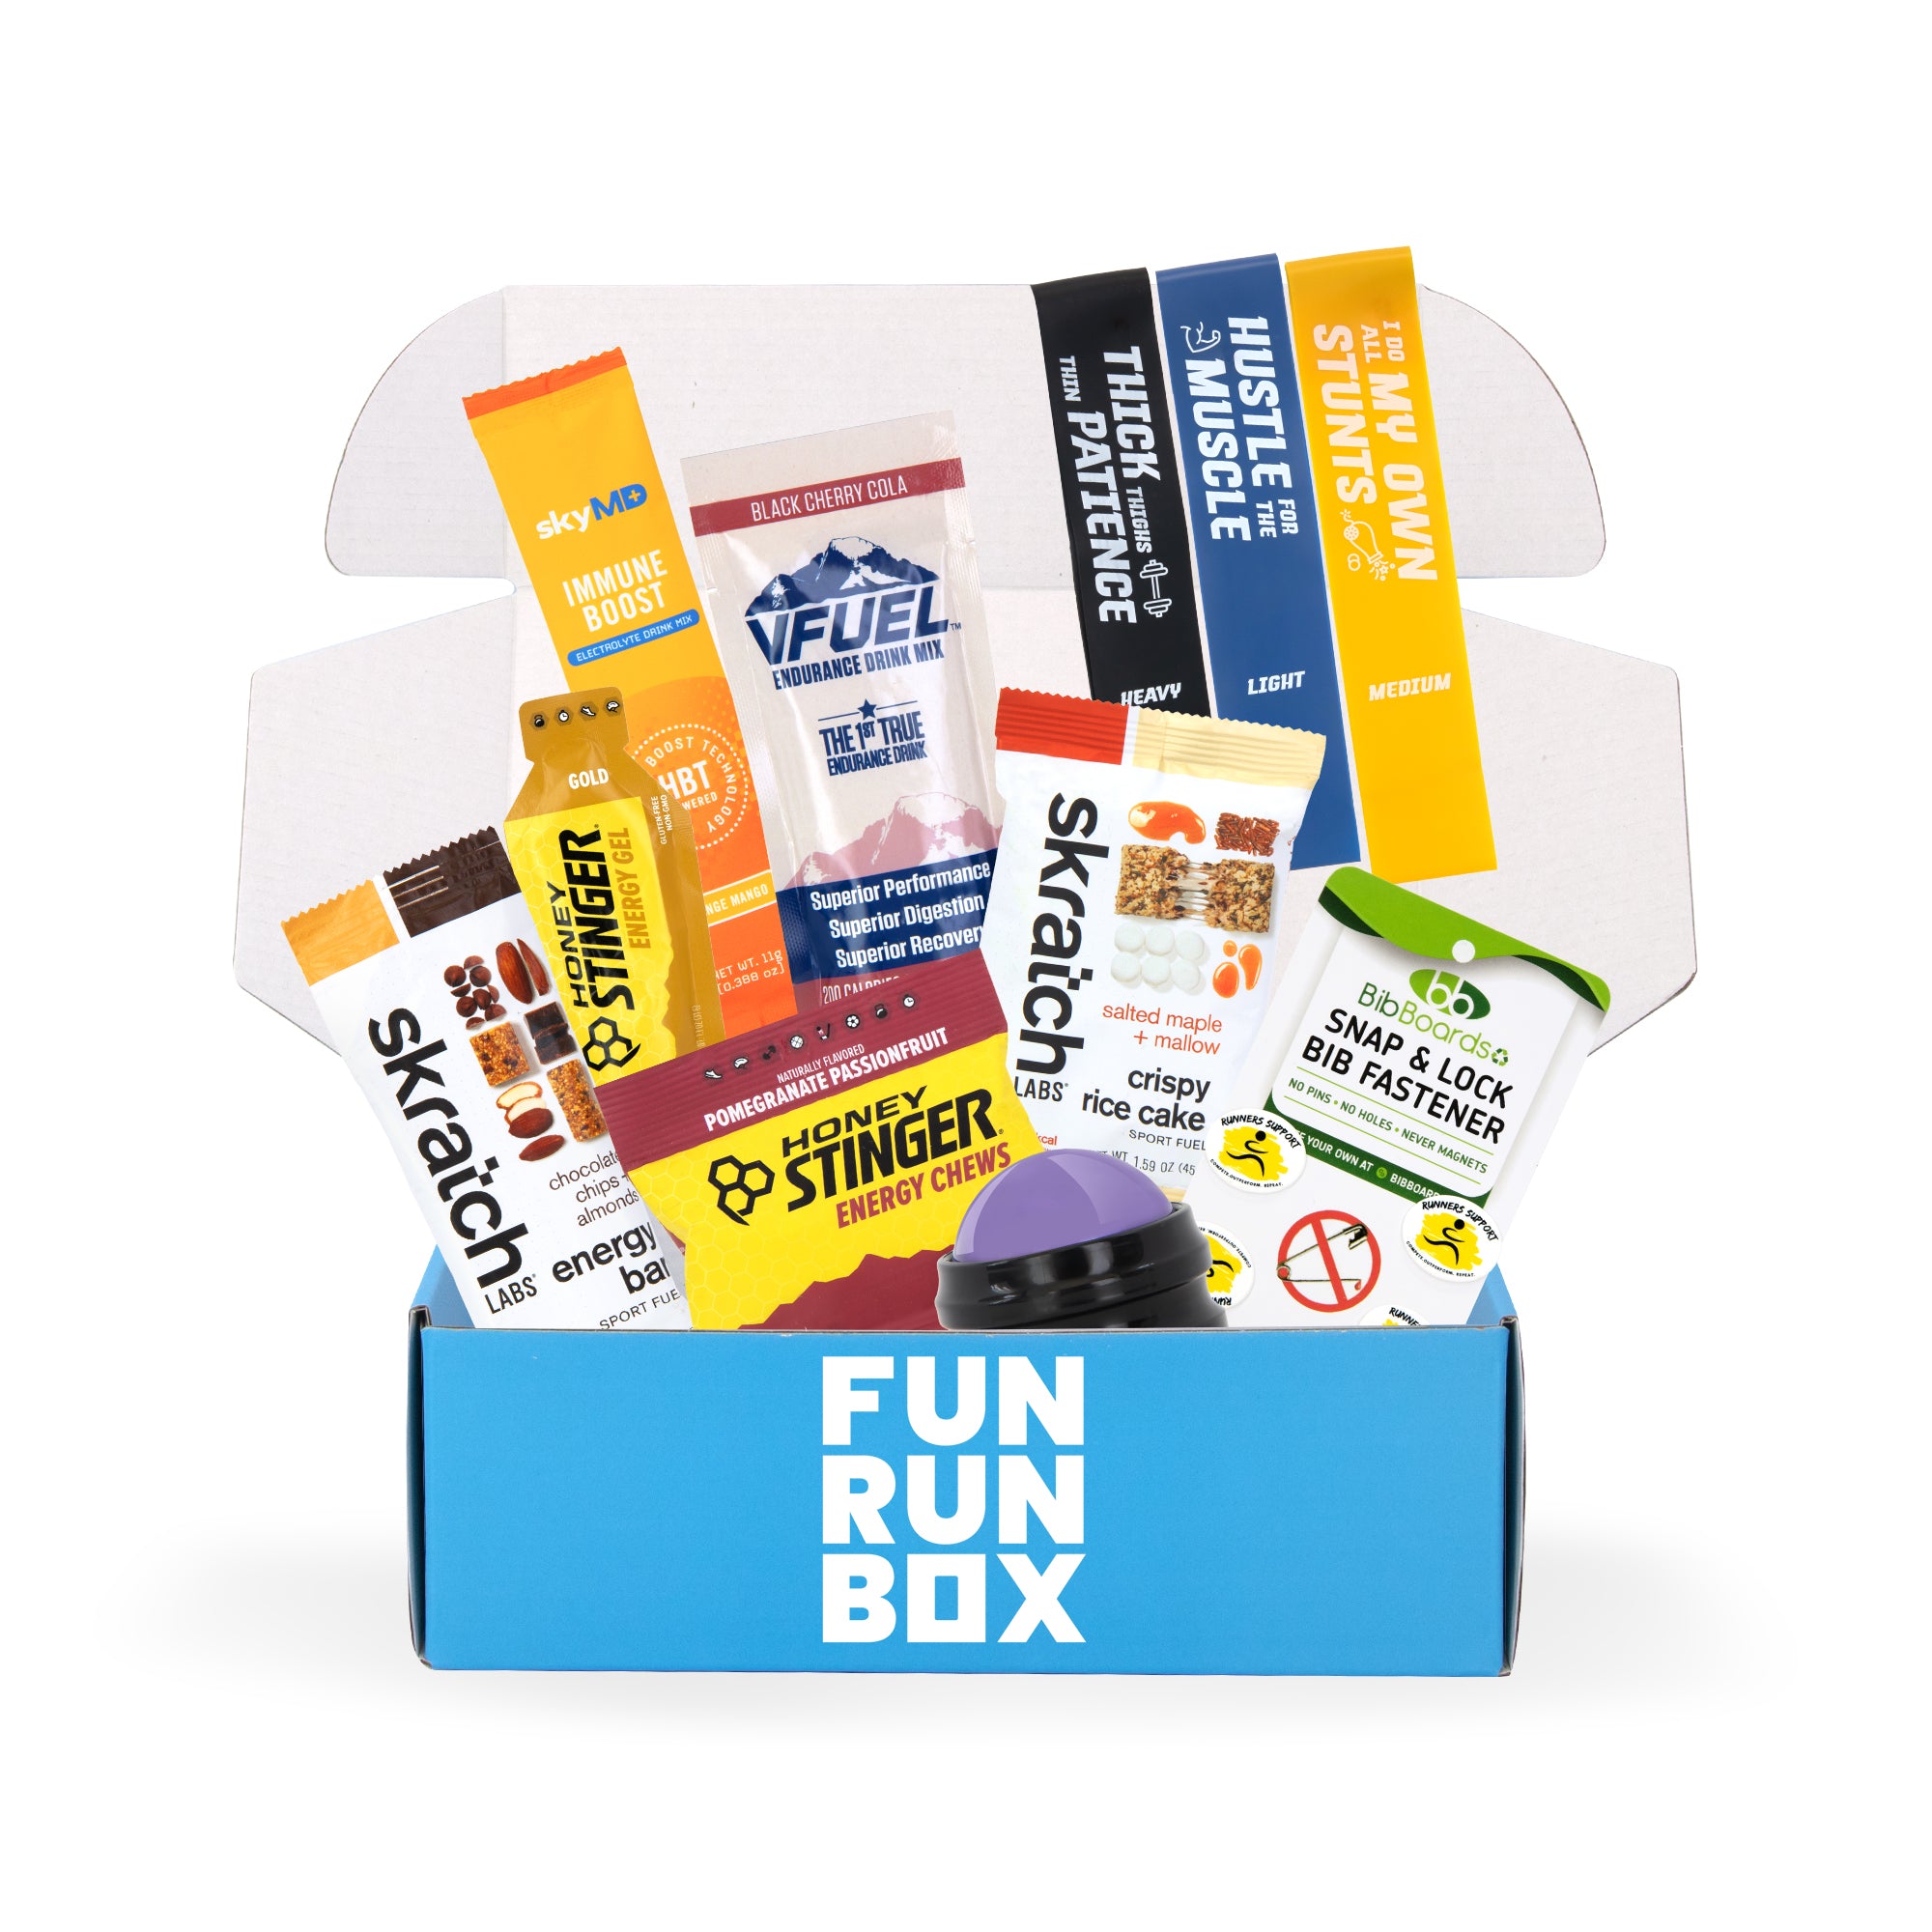 Runners Mystery Box - Fun Run Box